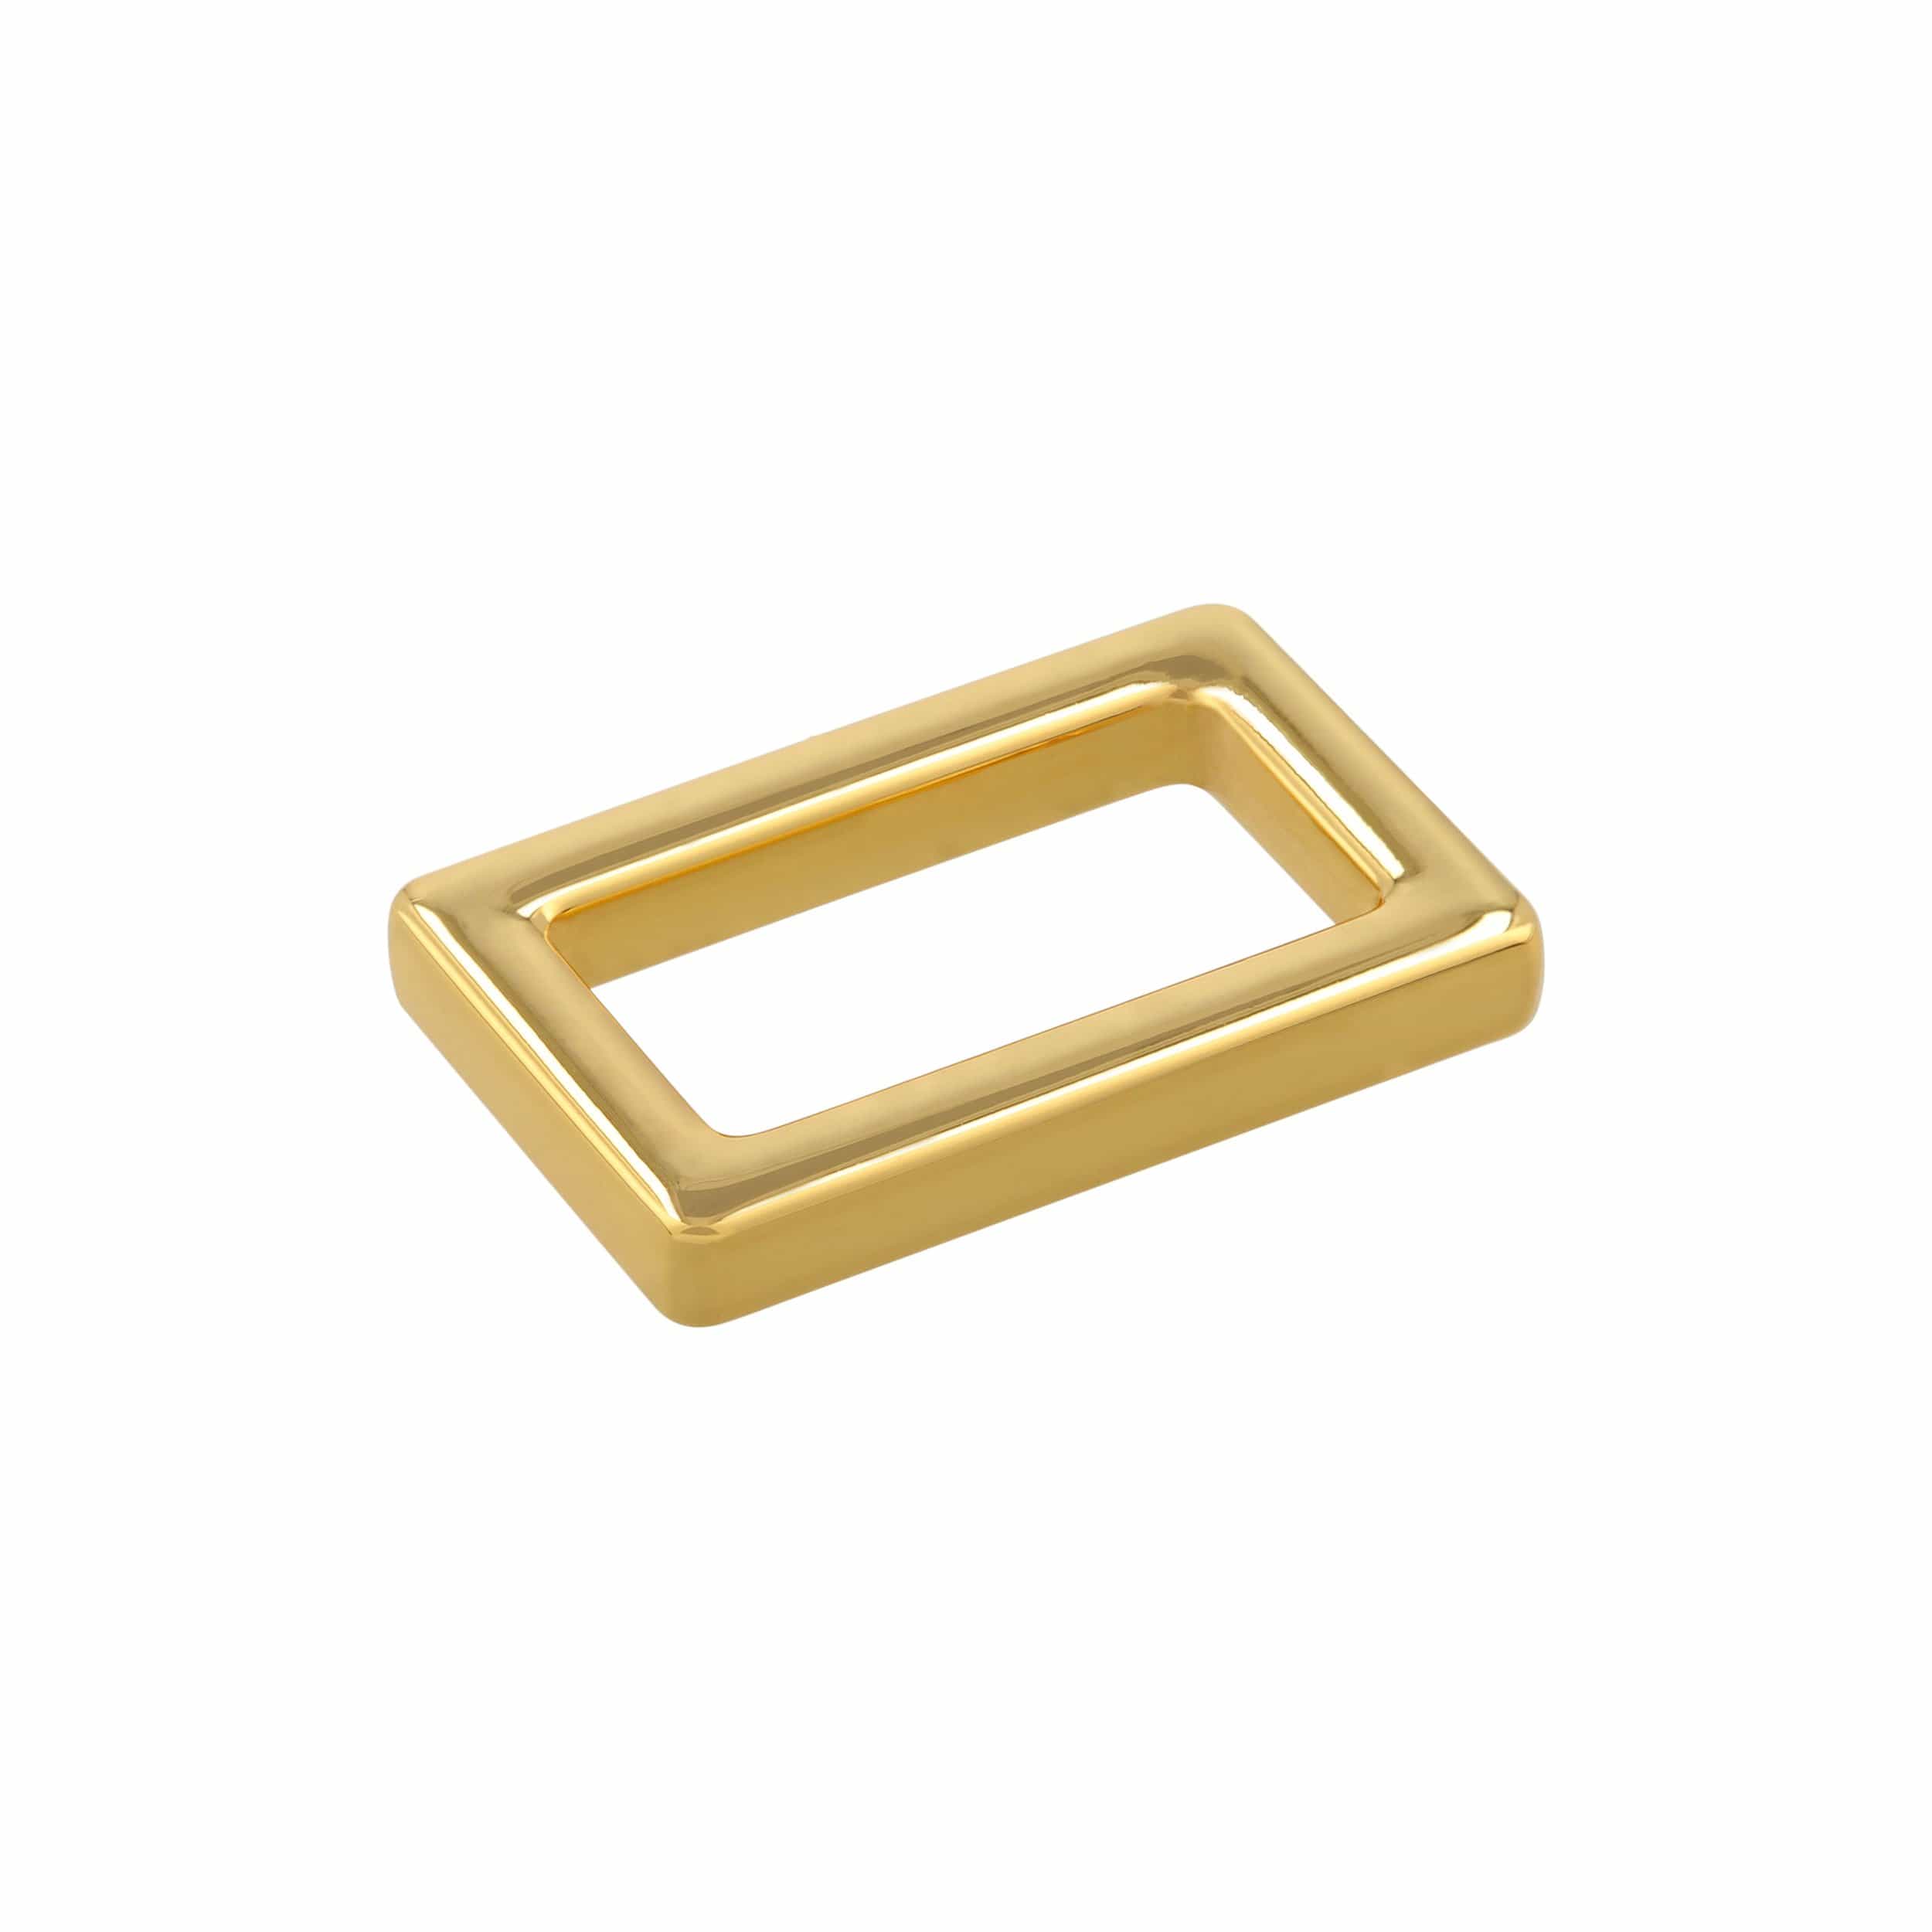 Ohio Travel Bag Rings & Slides 1" Gold, Rectangular Ring, Zinc Alloy, #P-3113-GOLD P-3113-GOLD